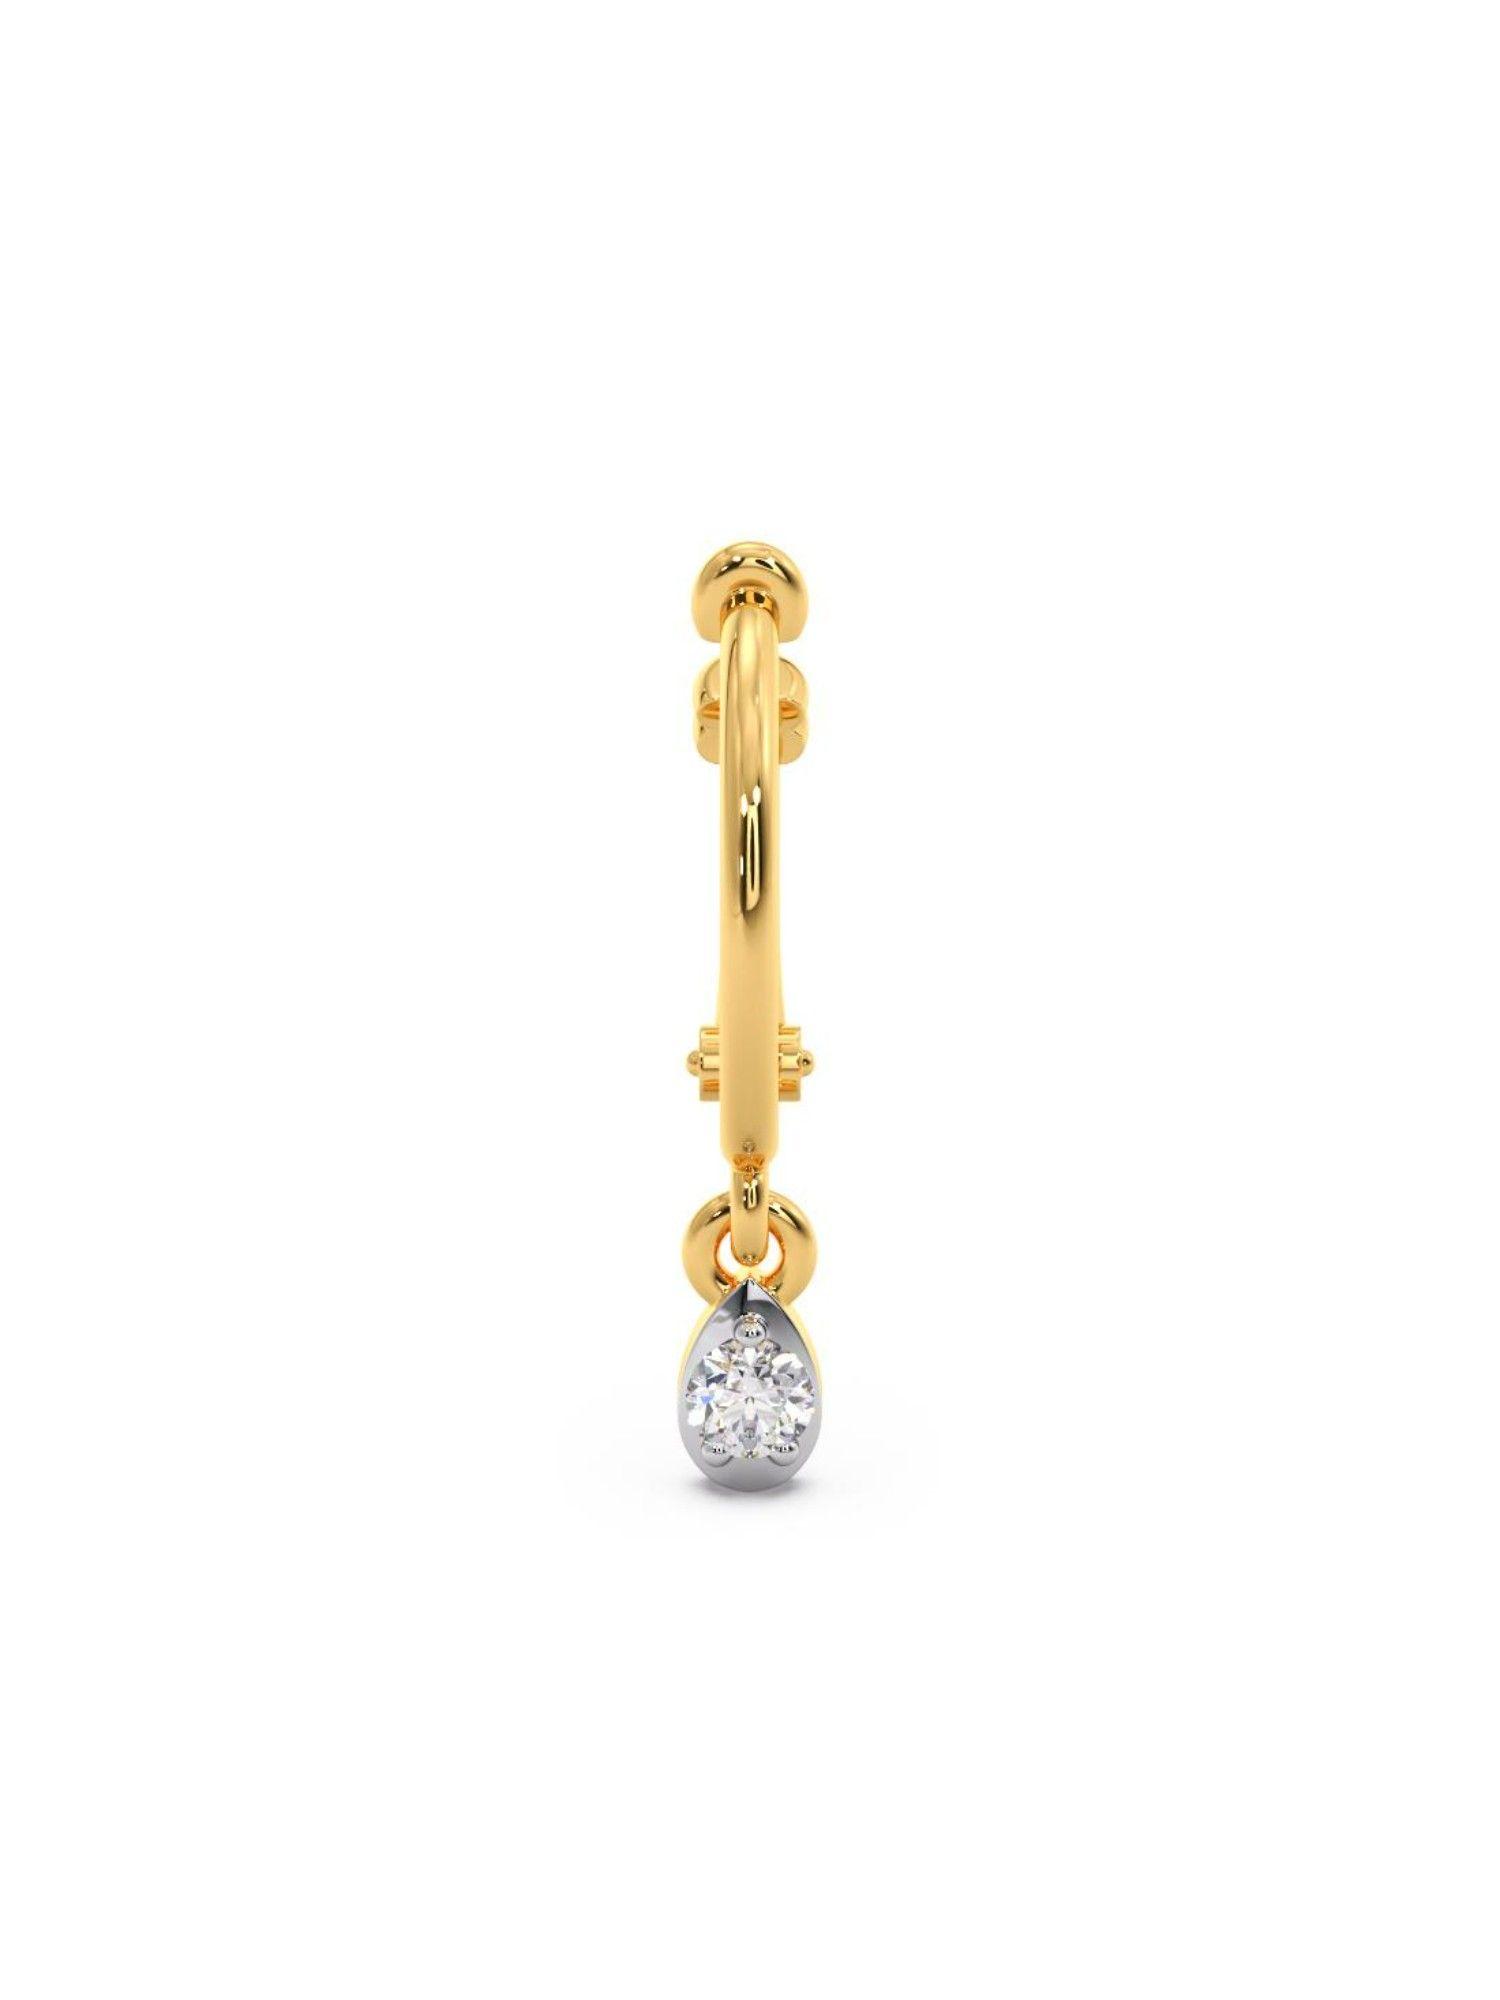 18k yellow gold bis hallmark 1 diamond wee drop nose pin for women